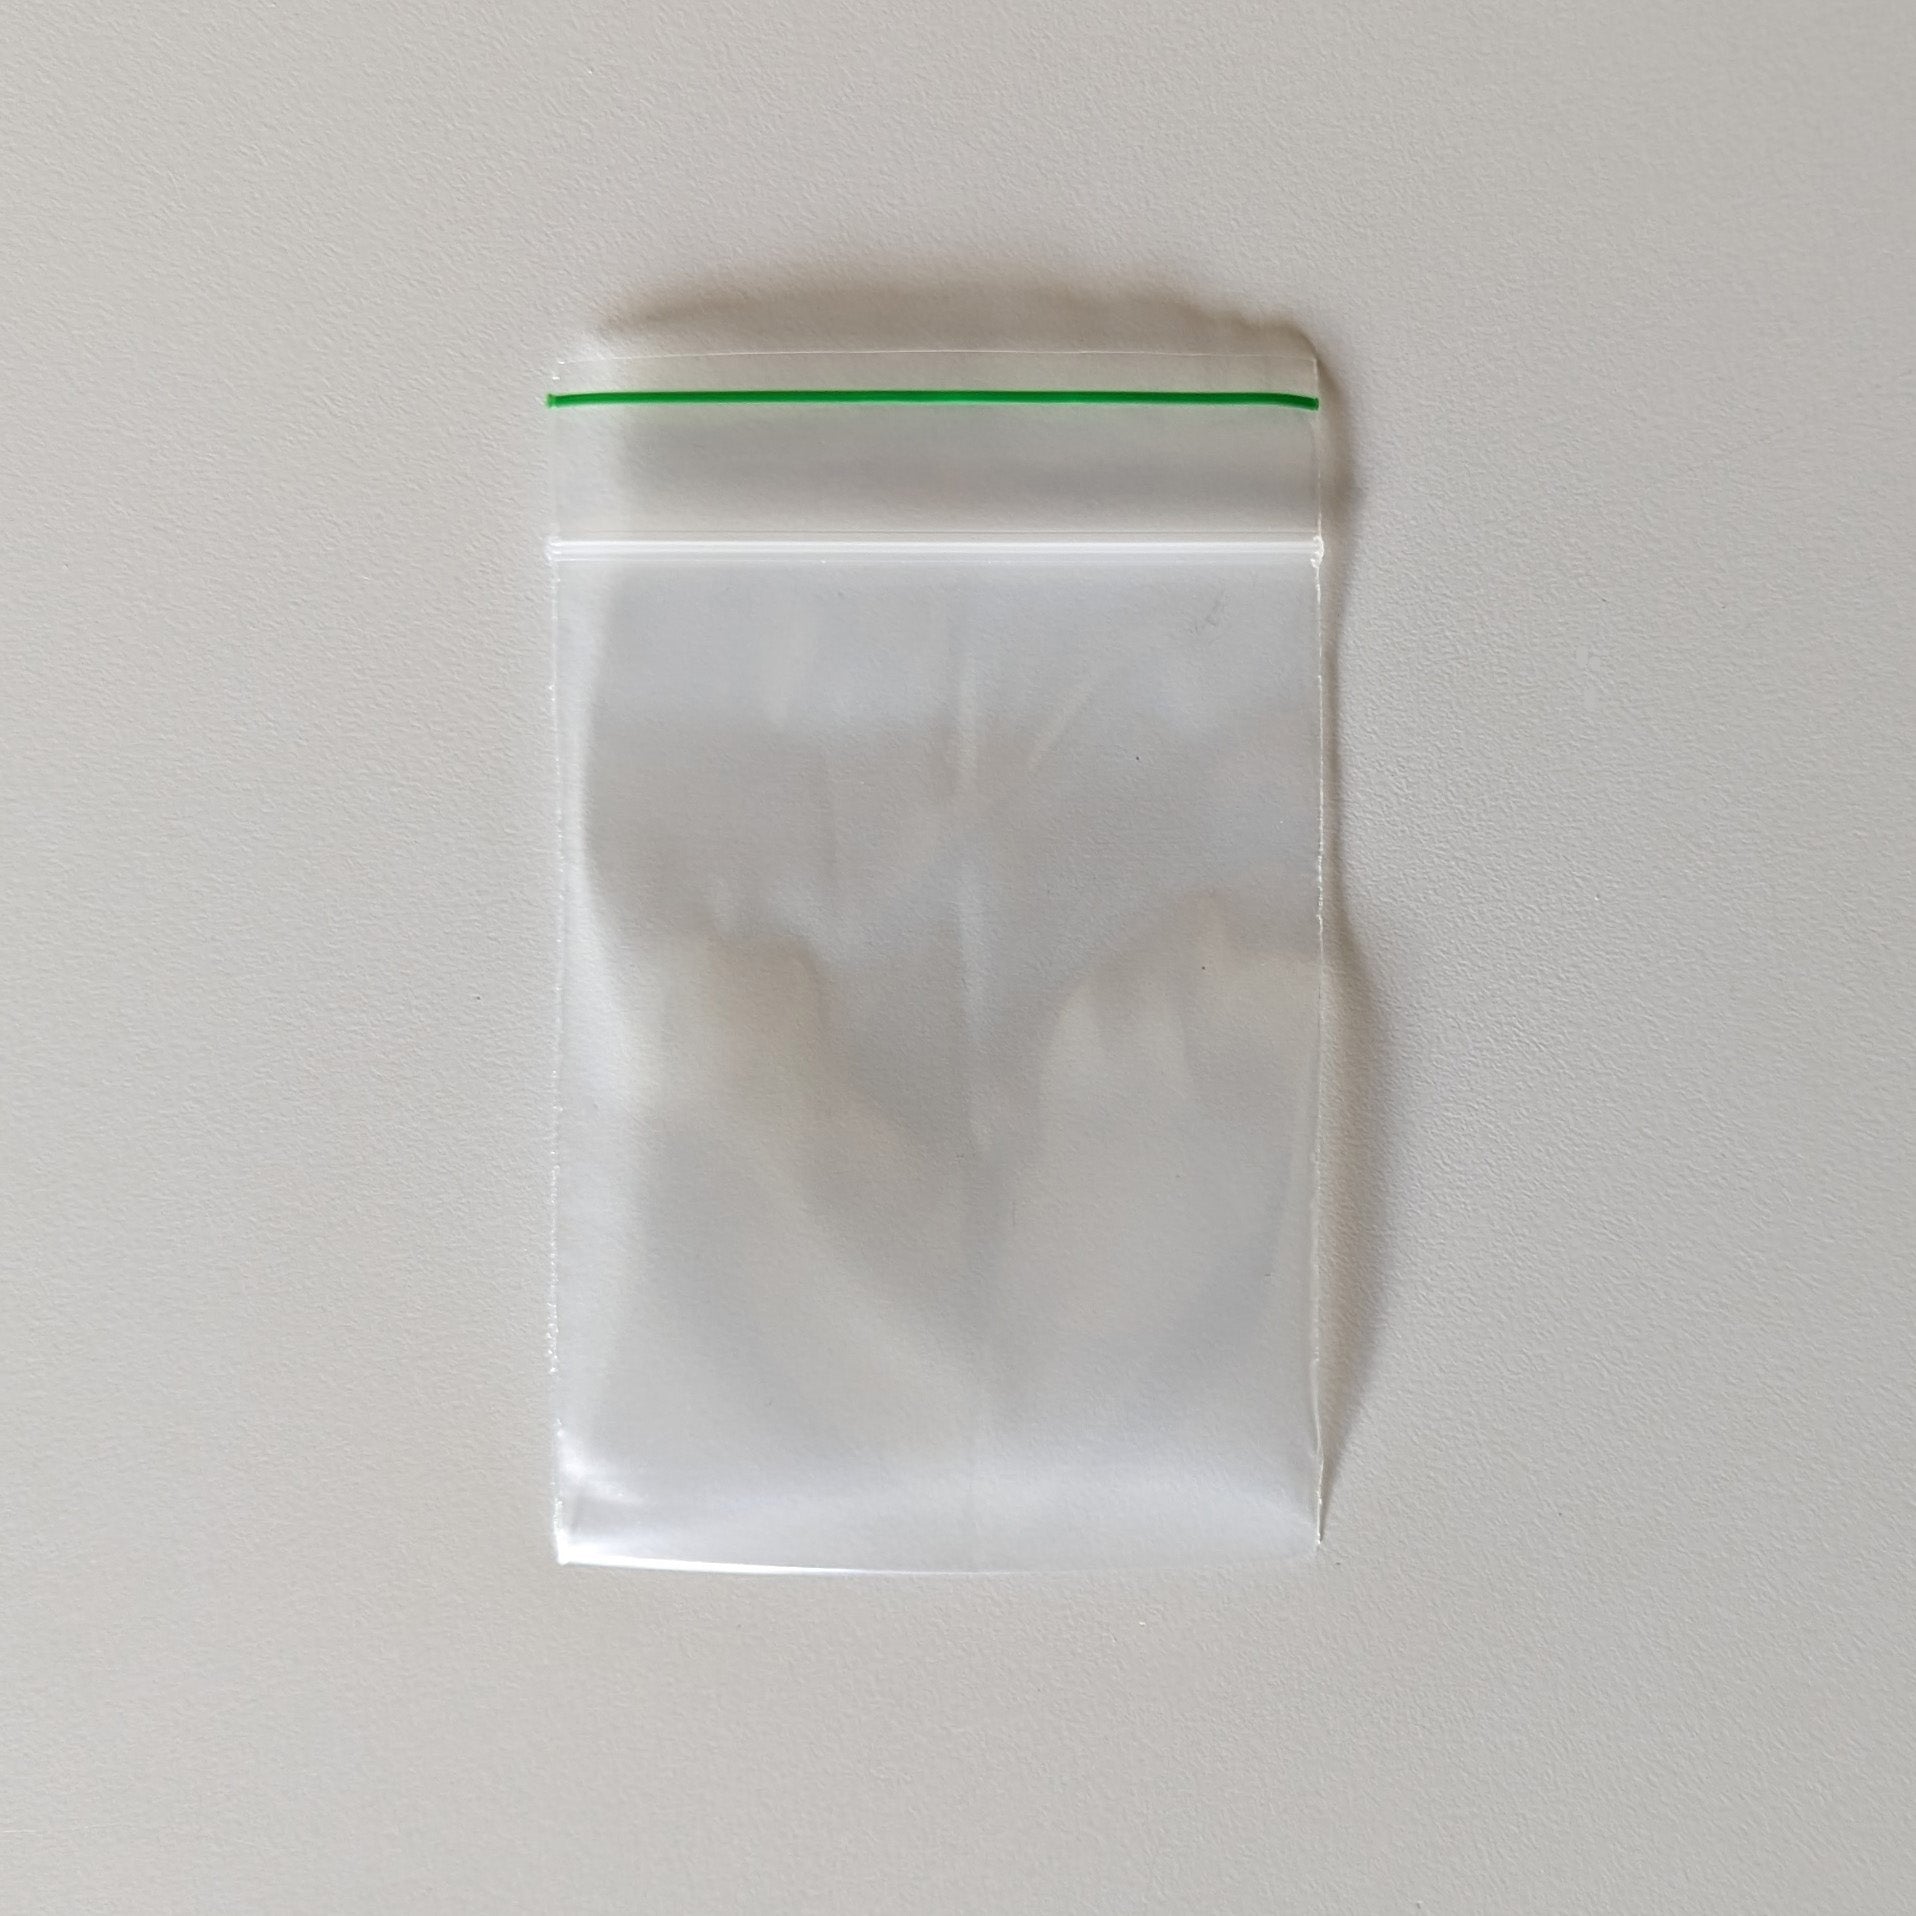 Small Clear Landfill-Biodegradable Plastic Ziplock Bags 1